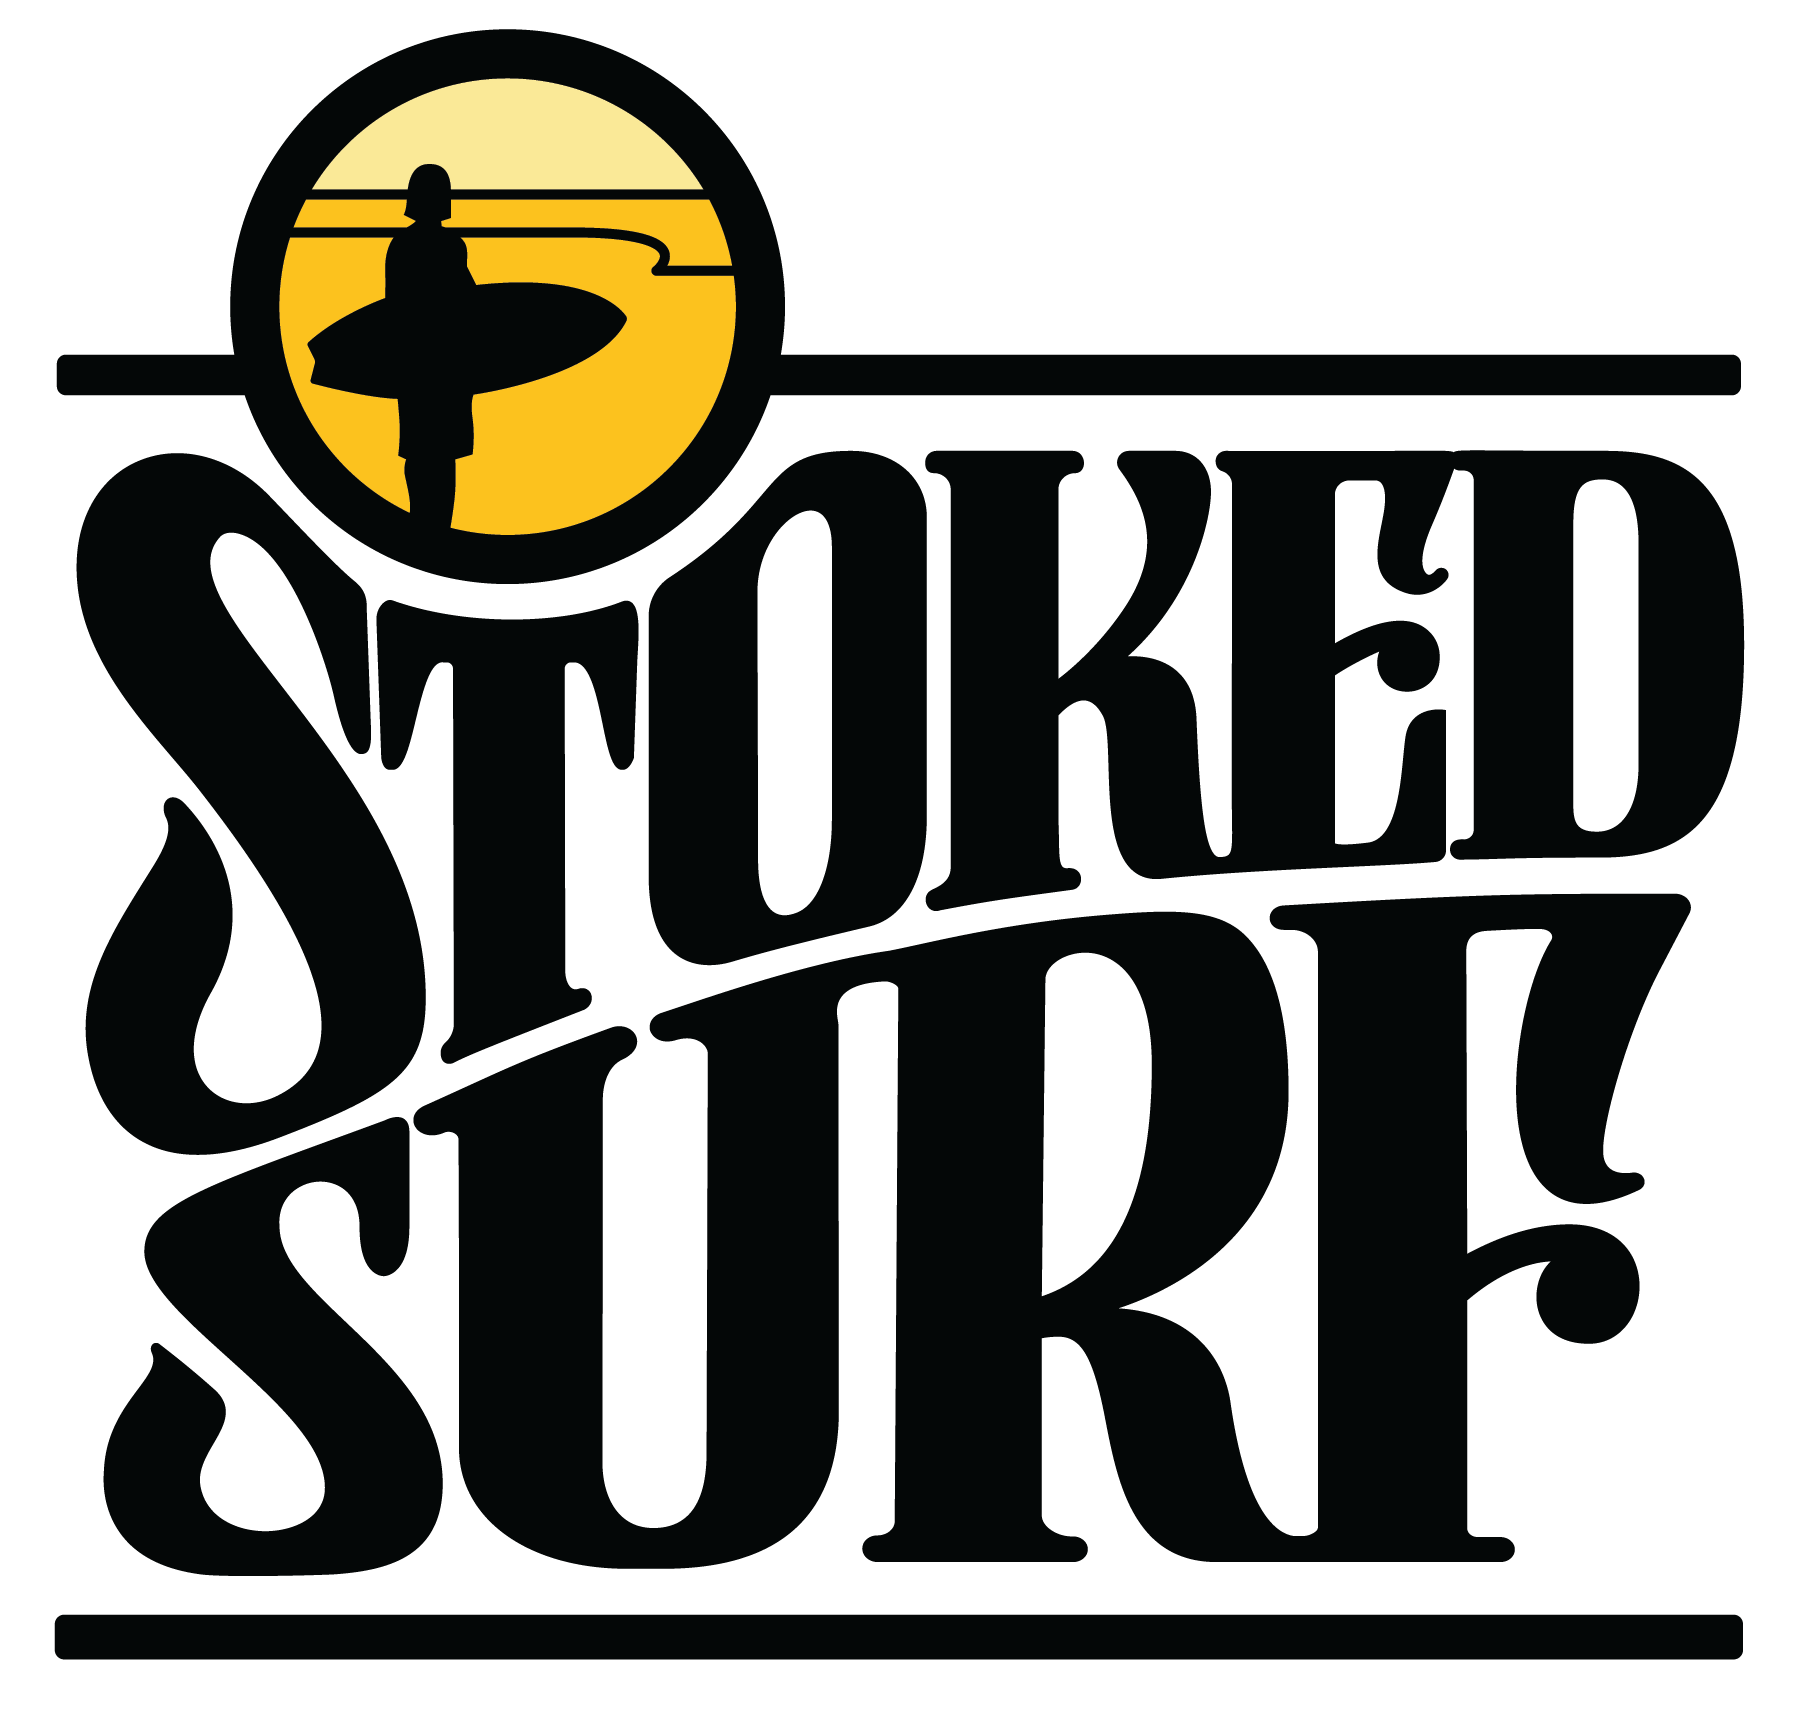 Stoked Surf School